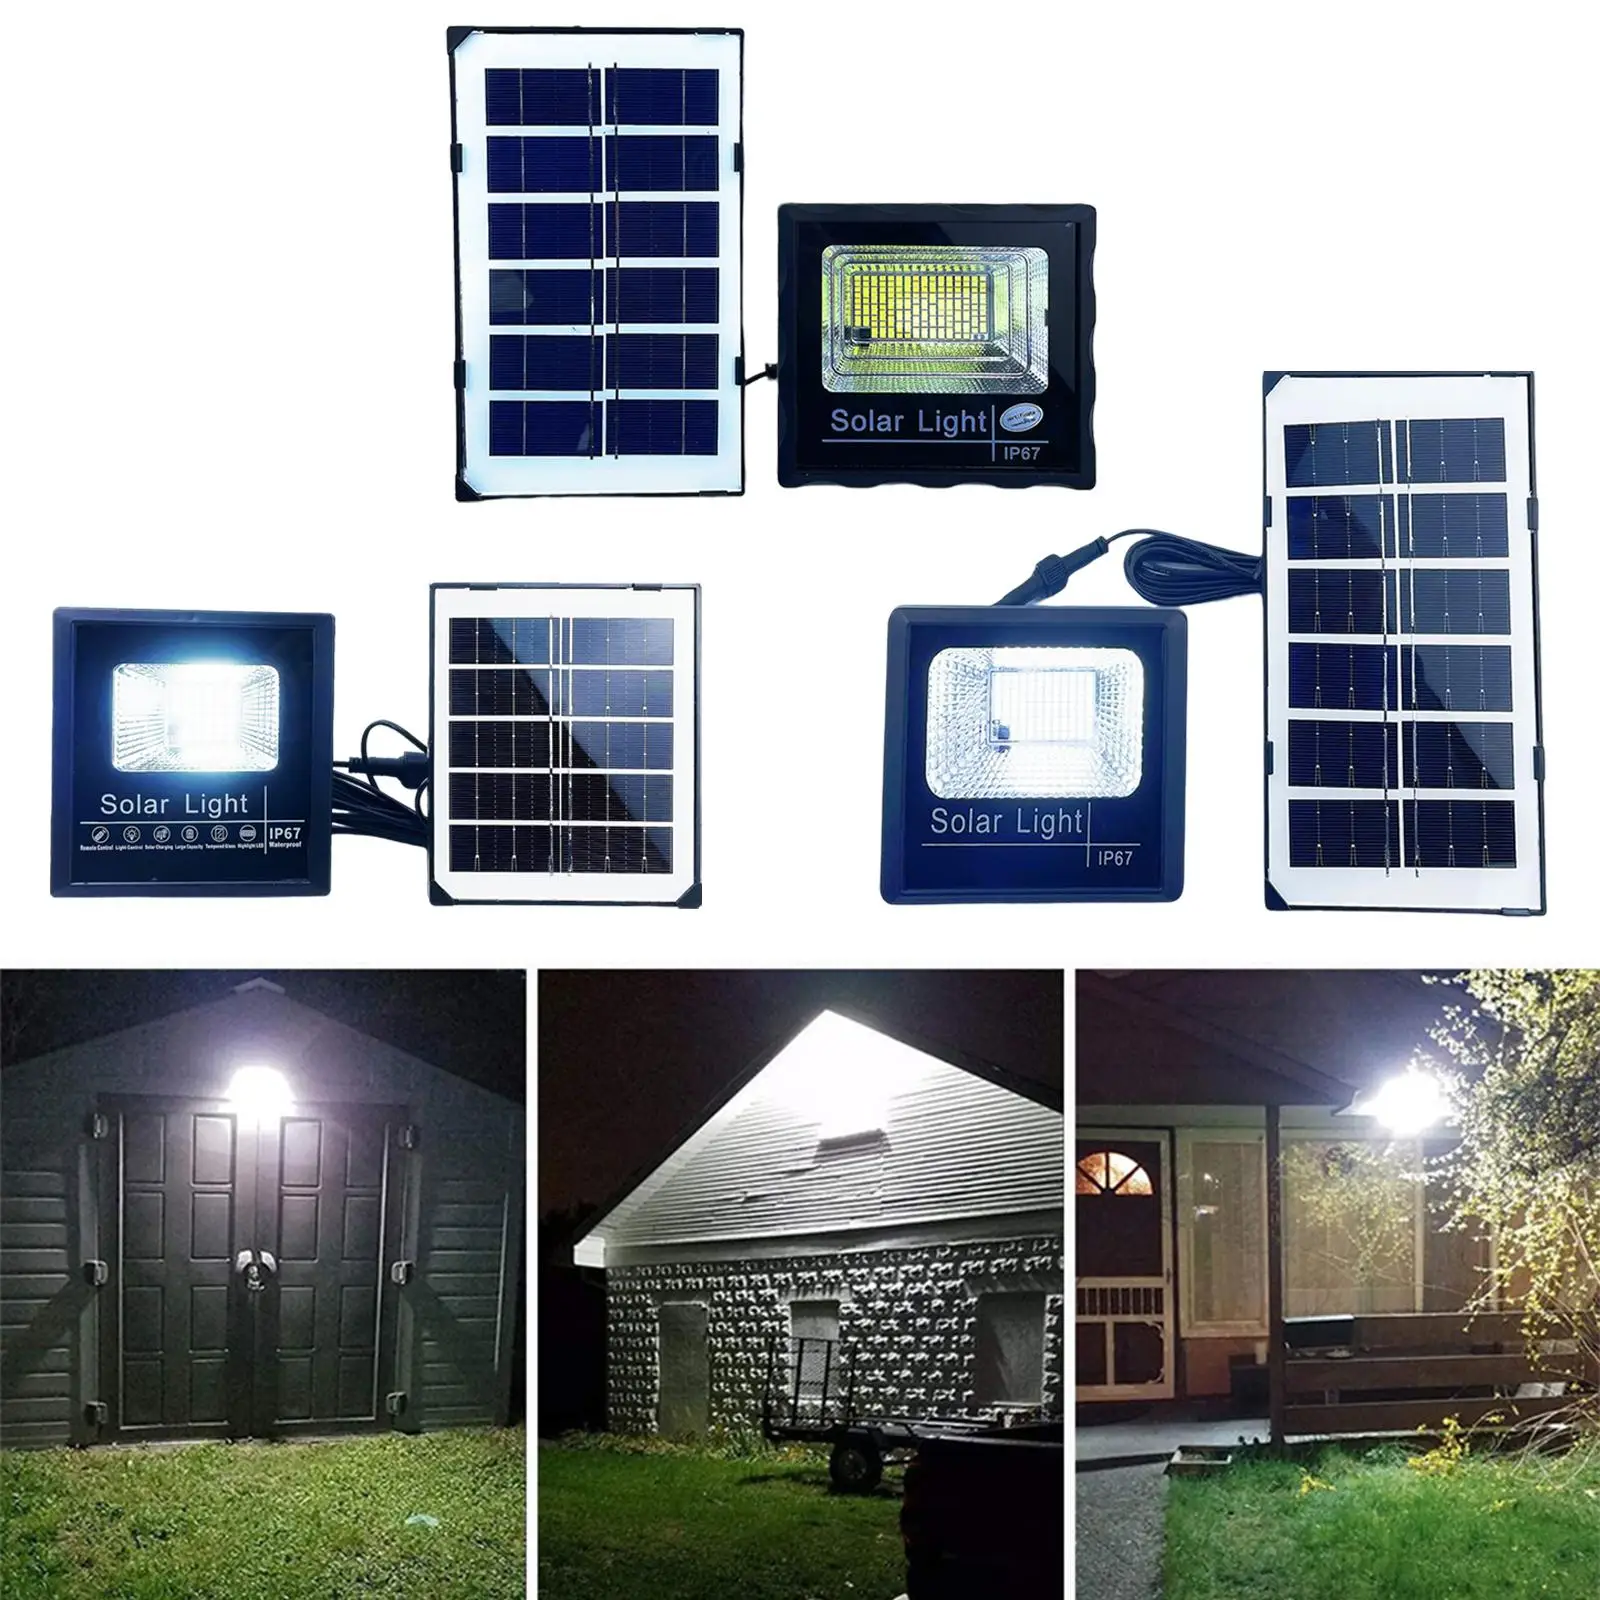 Outdoor Solar Light Solar Lamp Solar Street Light with Remote Control, Motion Sensor, LED Spotlight for Patio Backyard Lawn